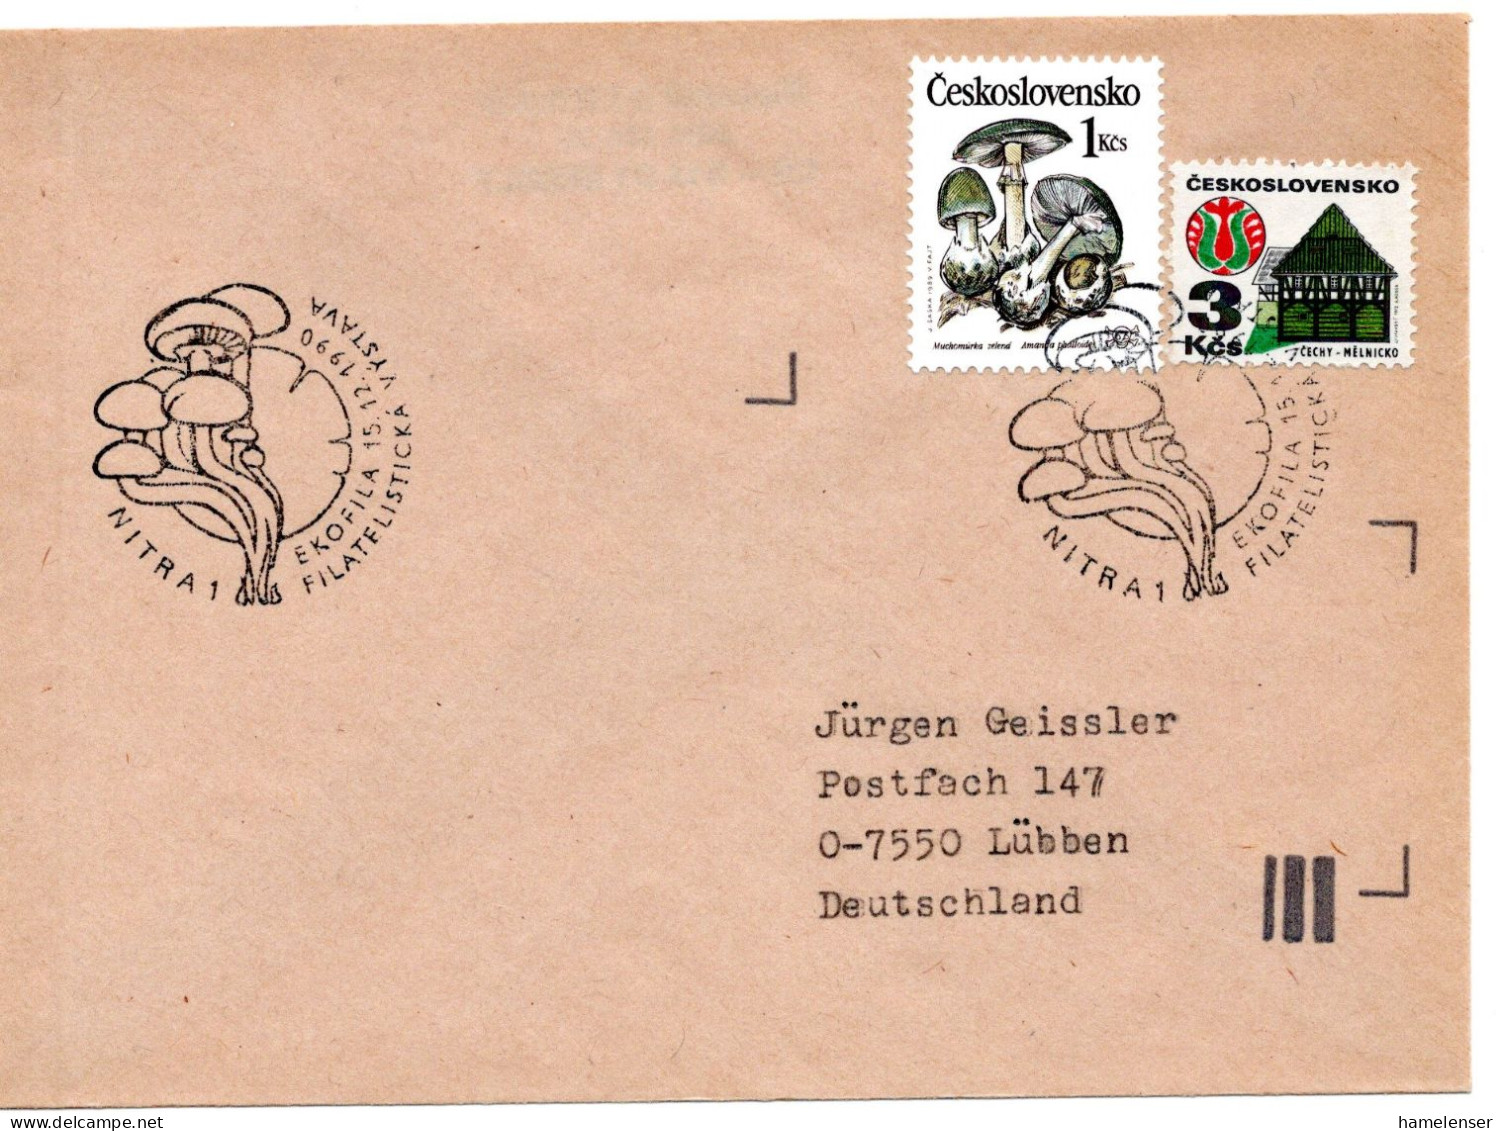 59375 - Tschechoslowakei - 1990 - 1Kcs Pilze MiF A Bf NITRA - EKOFILA ... -> Deutschland - Mushrooms